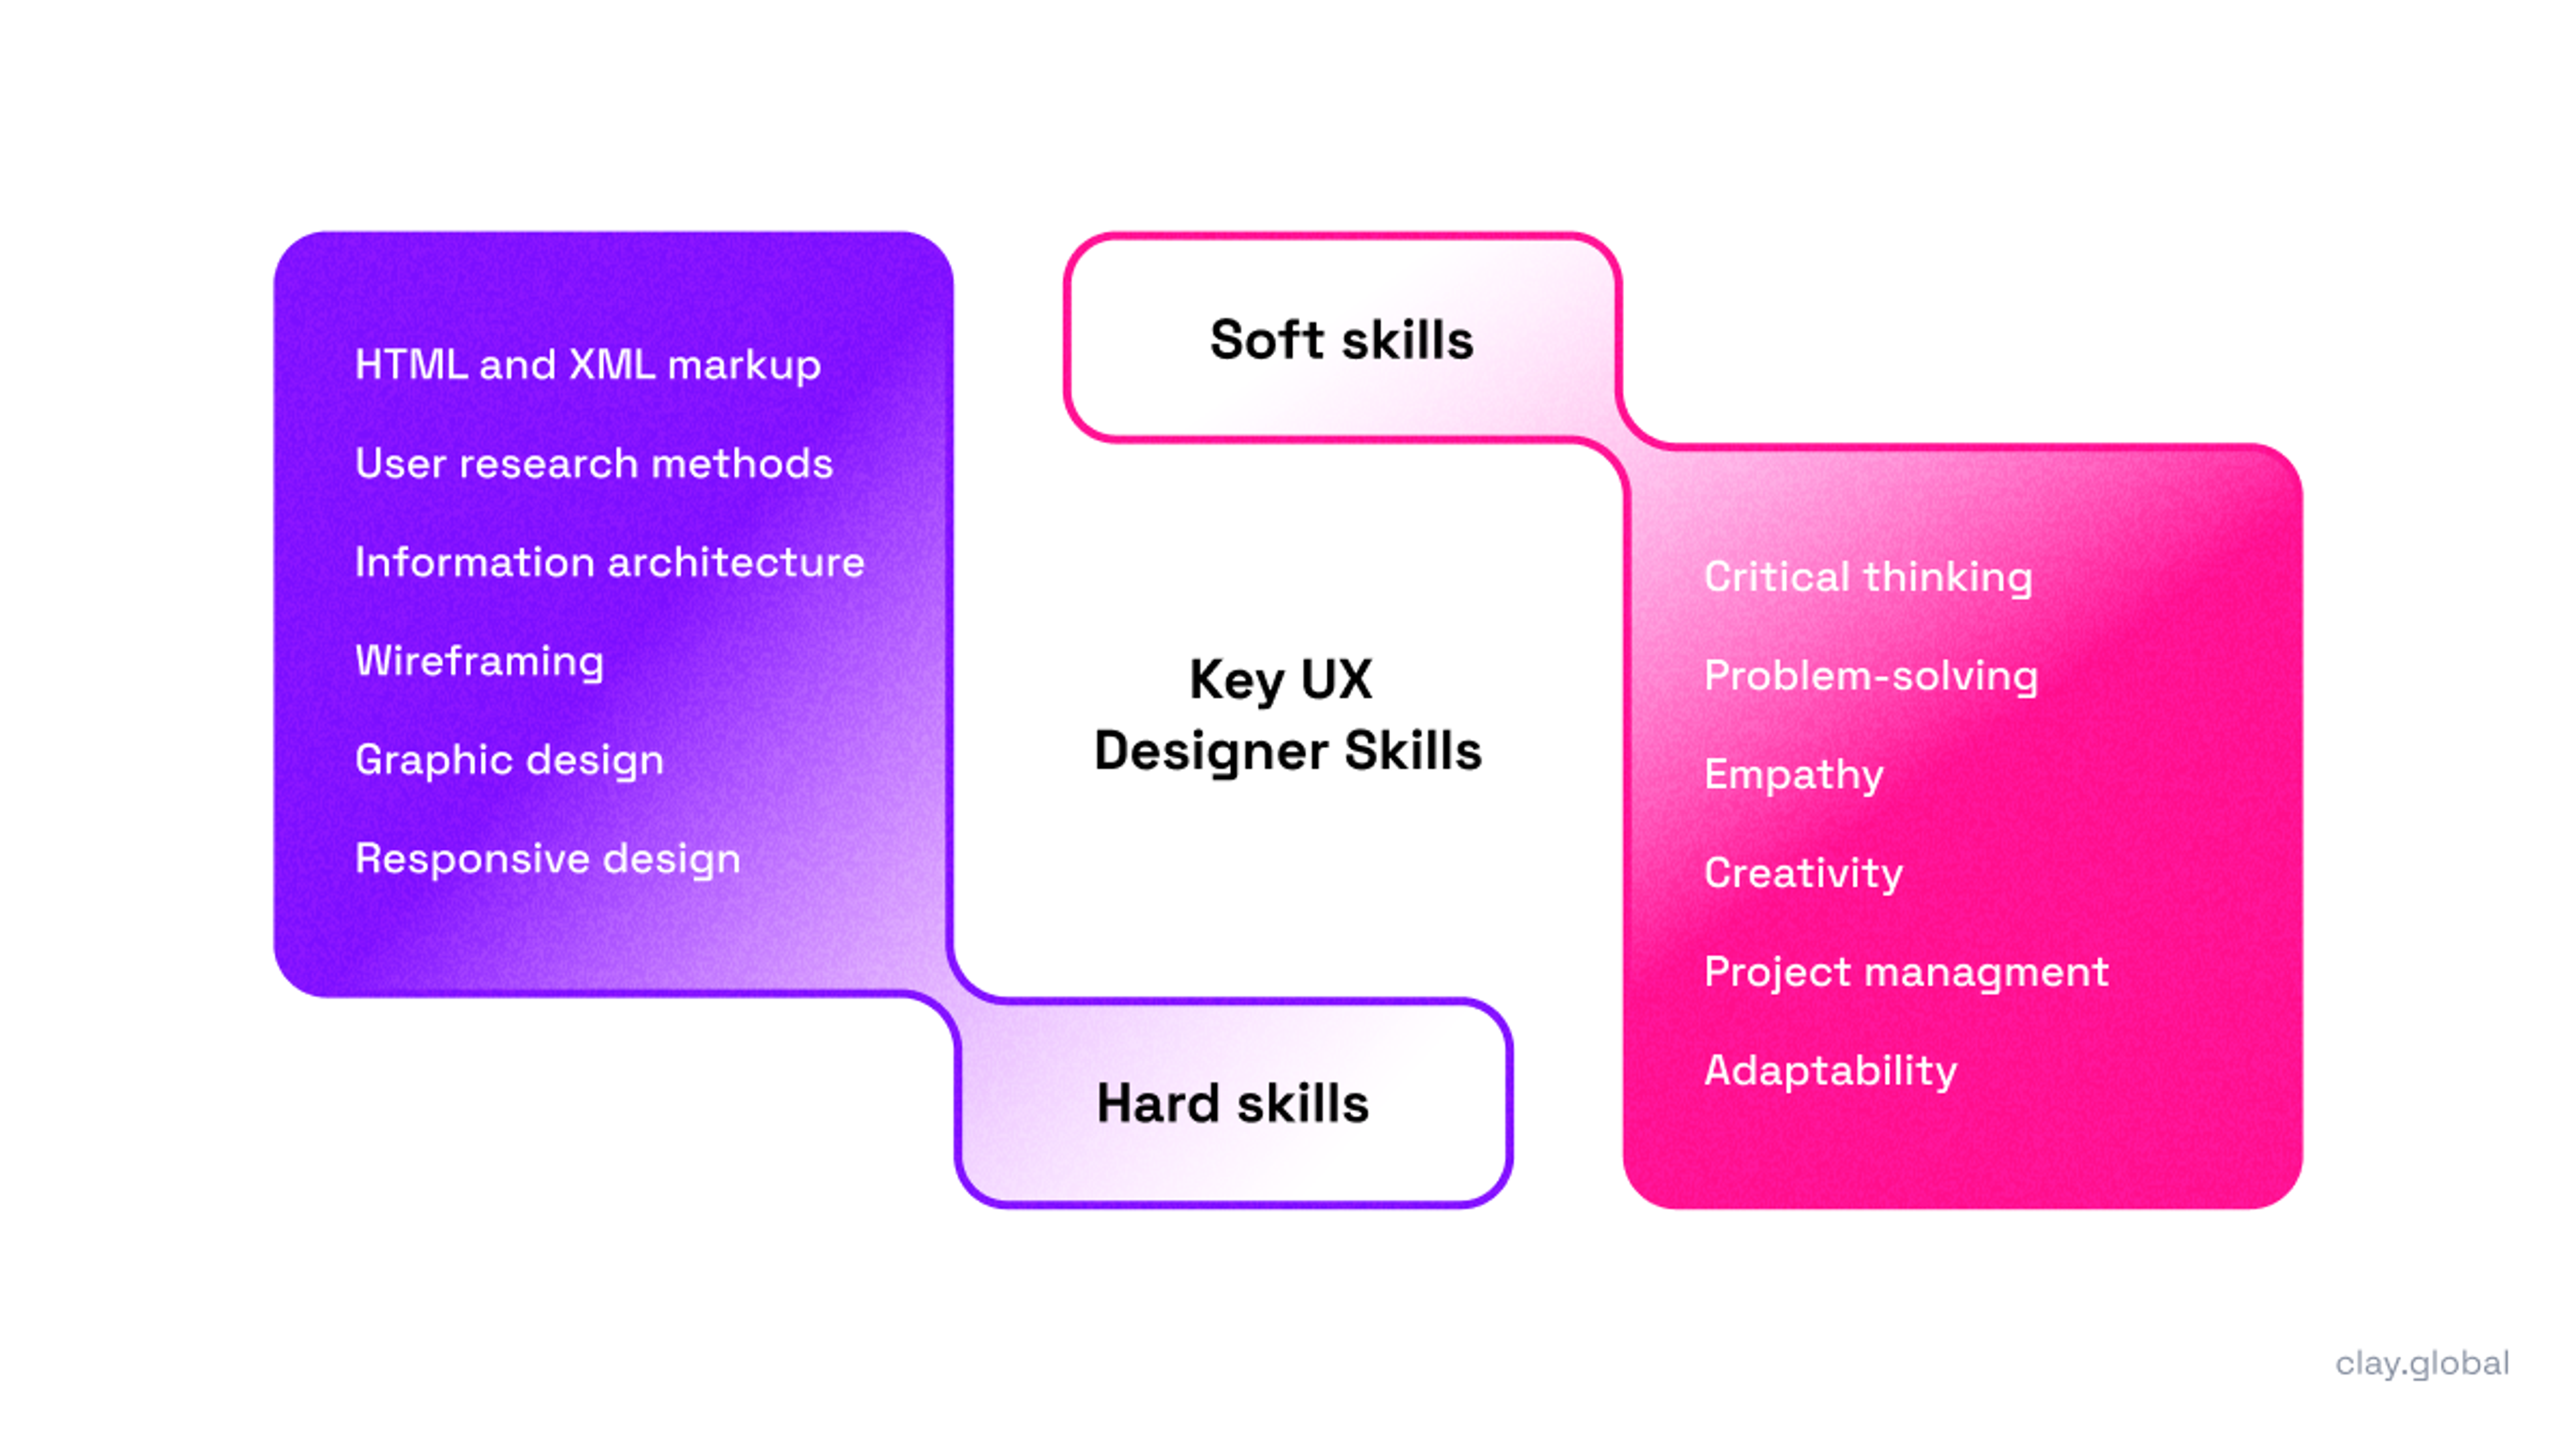 Key UX Designer Skills